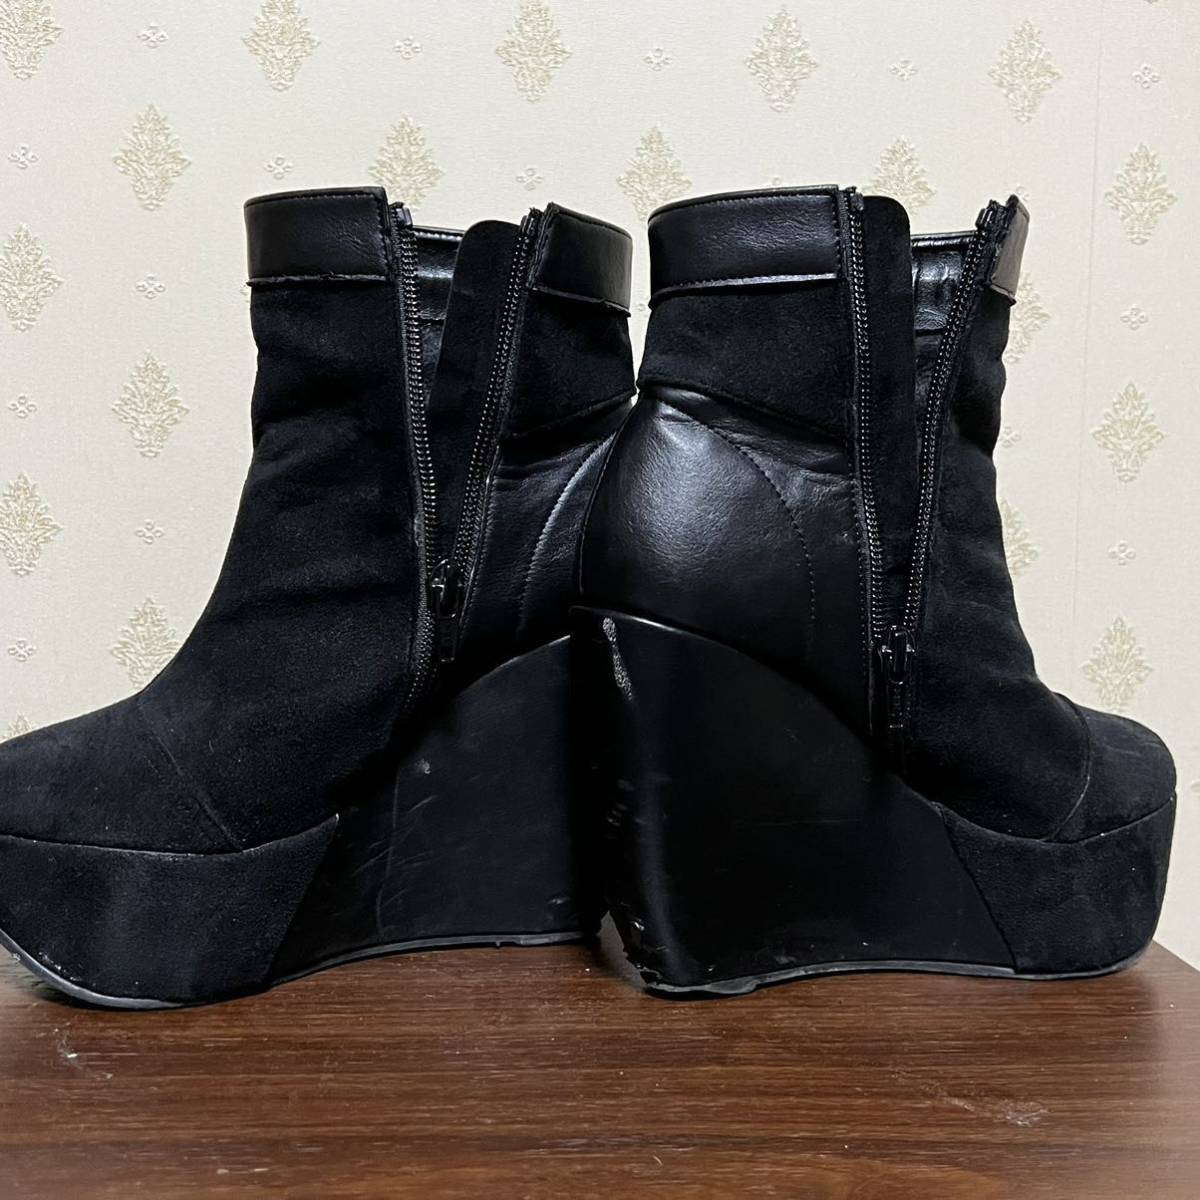  bootie boots short boots thickness bottom heel shoes high heel S black Wedge sole side zipper 